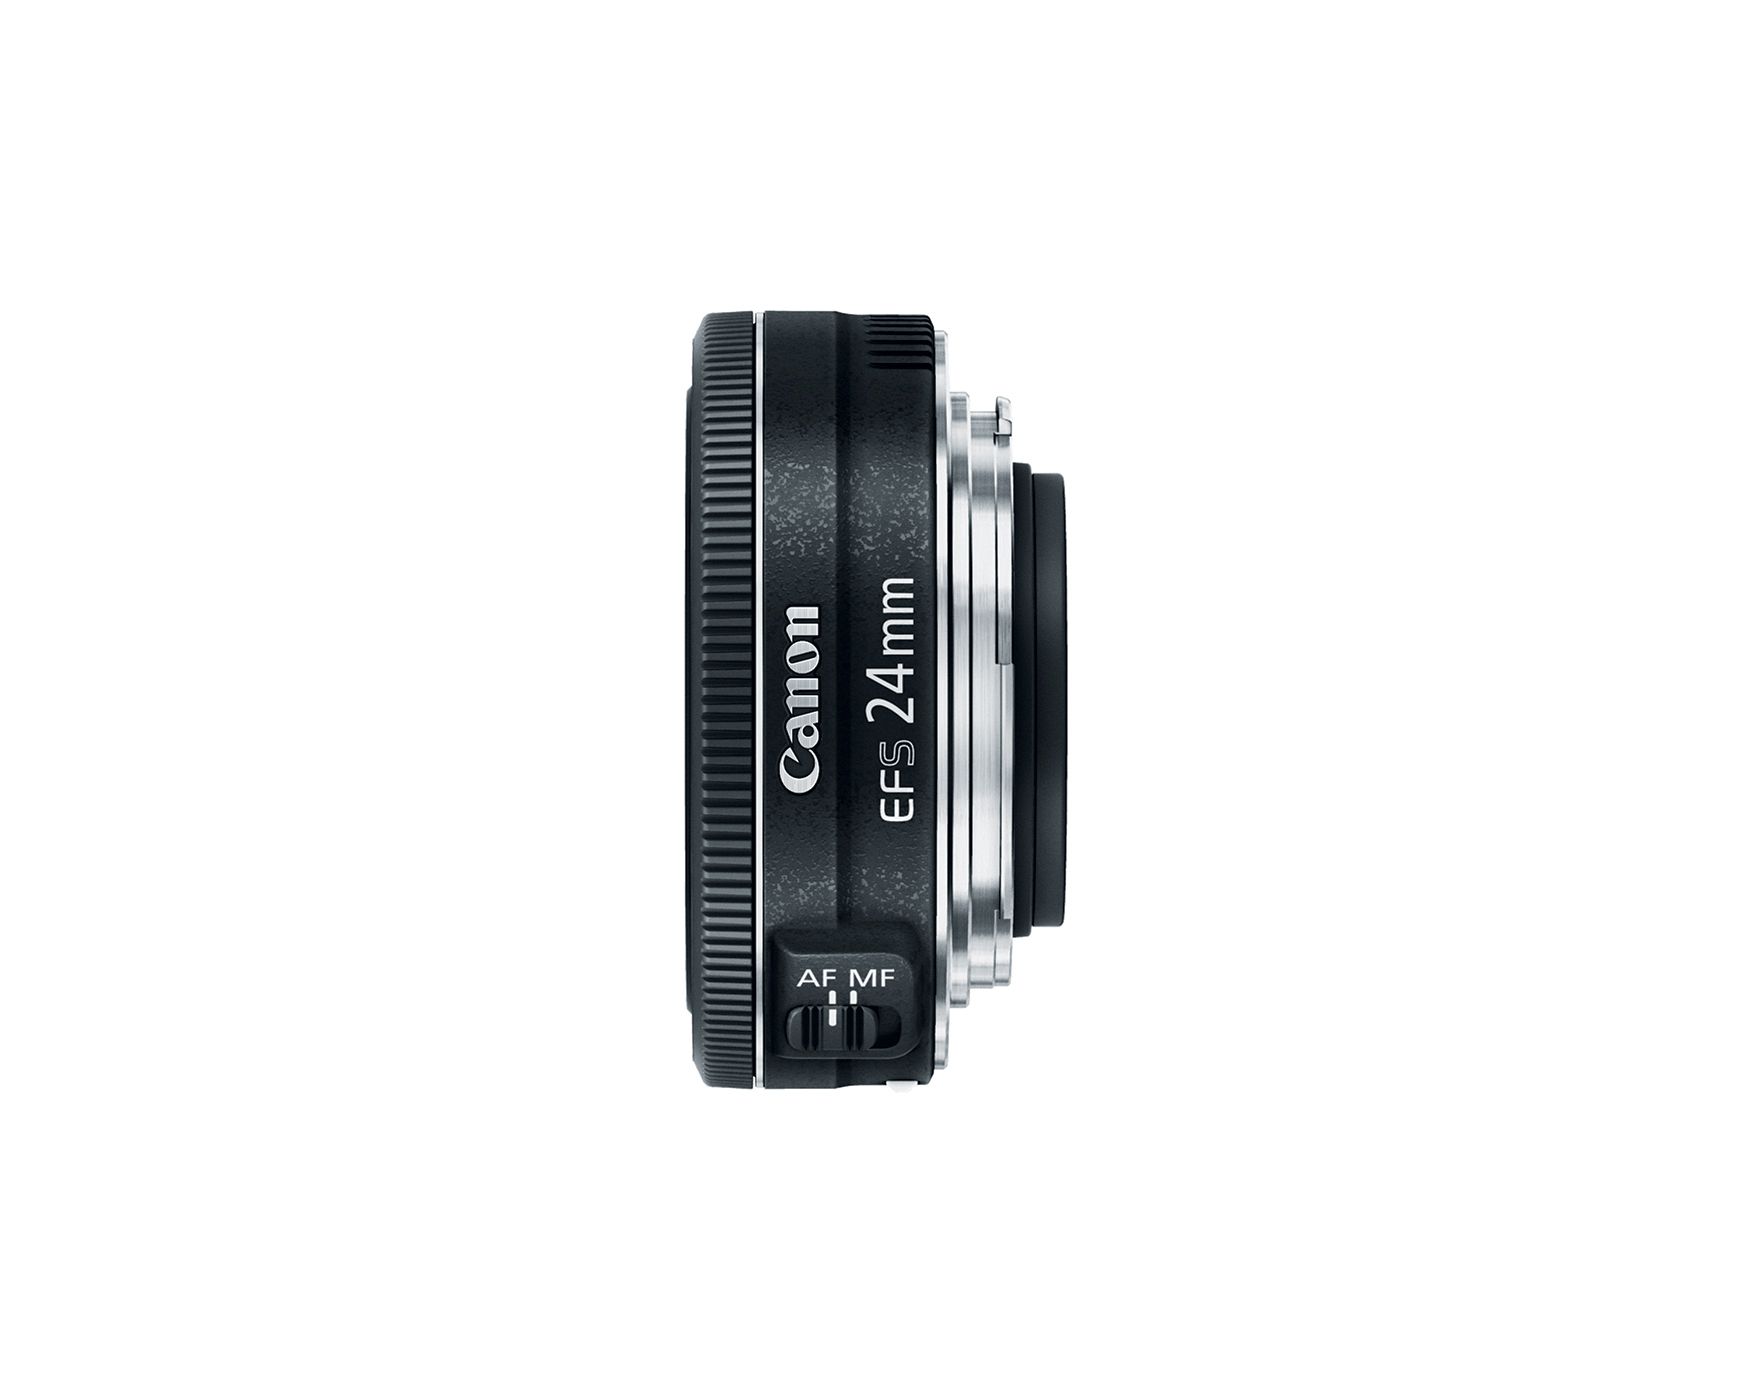 Canon EF-S 24mm F2.8 STM Lens